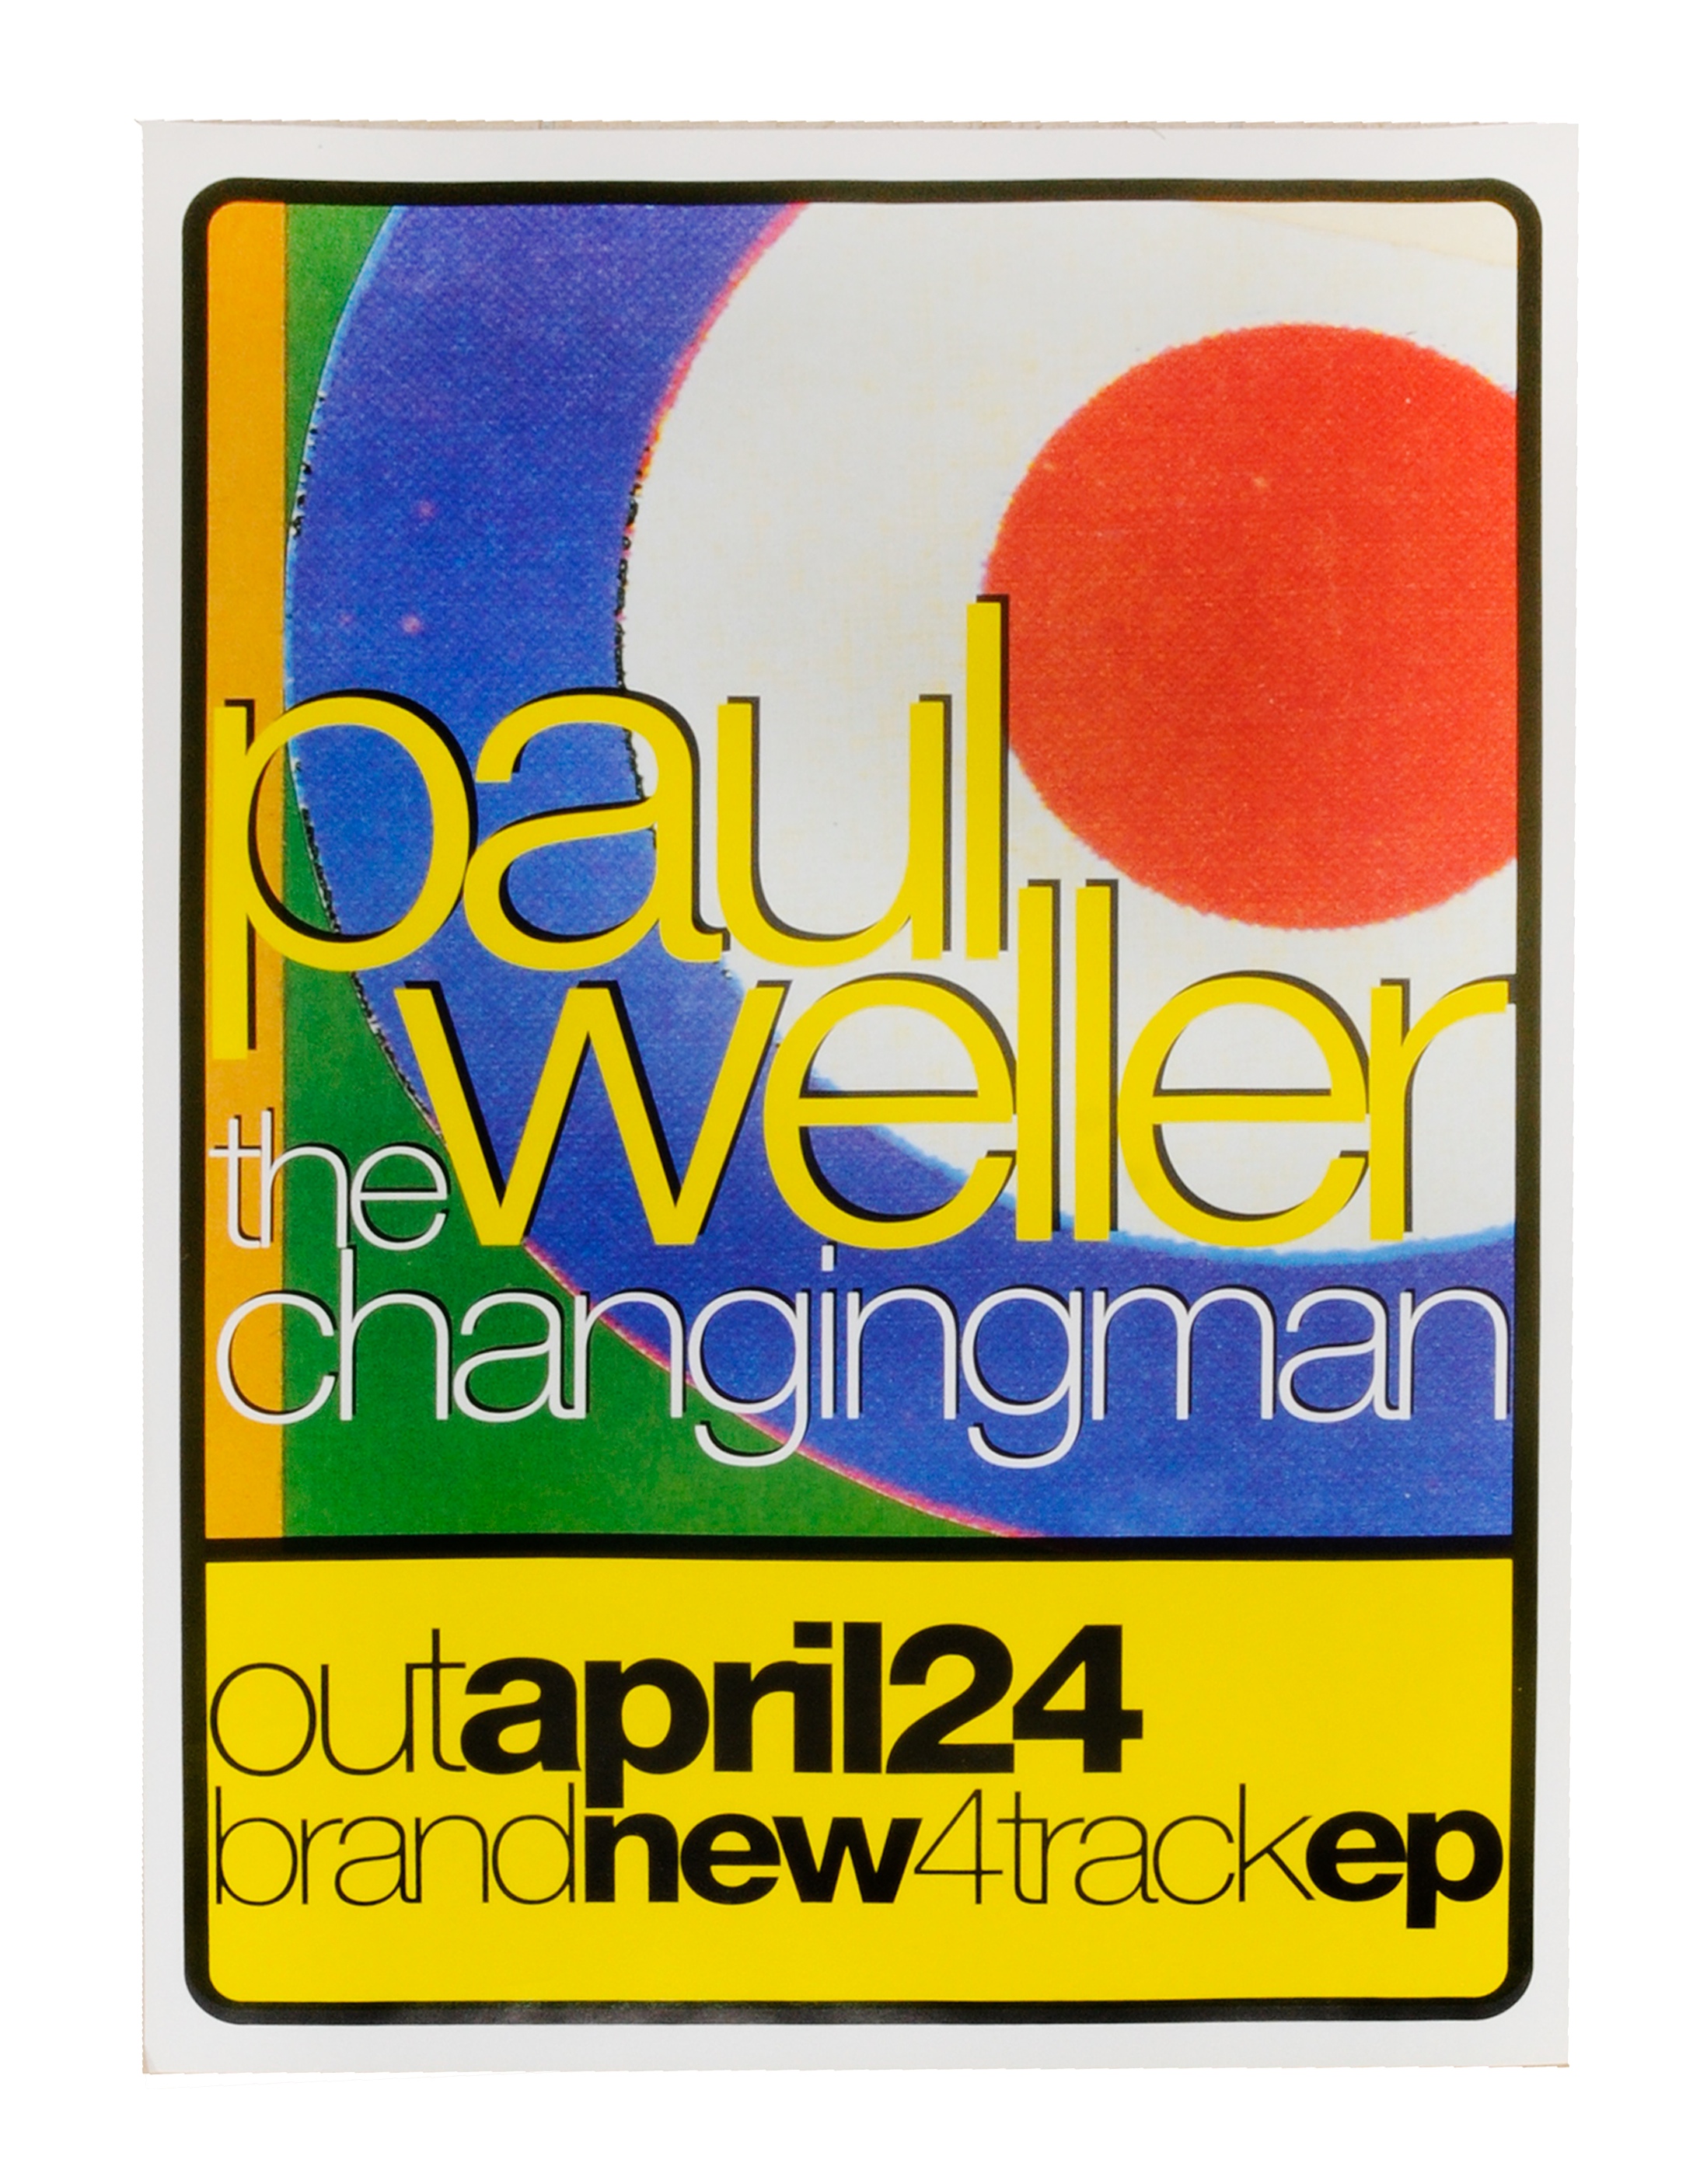 Paul Weller 1